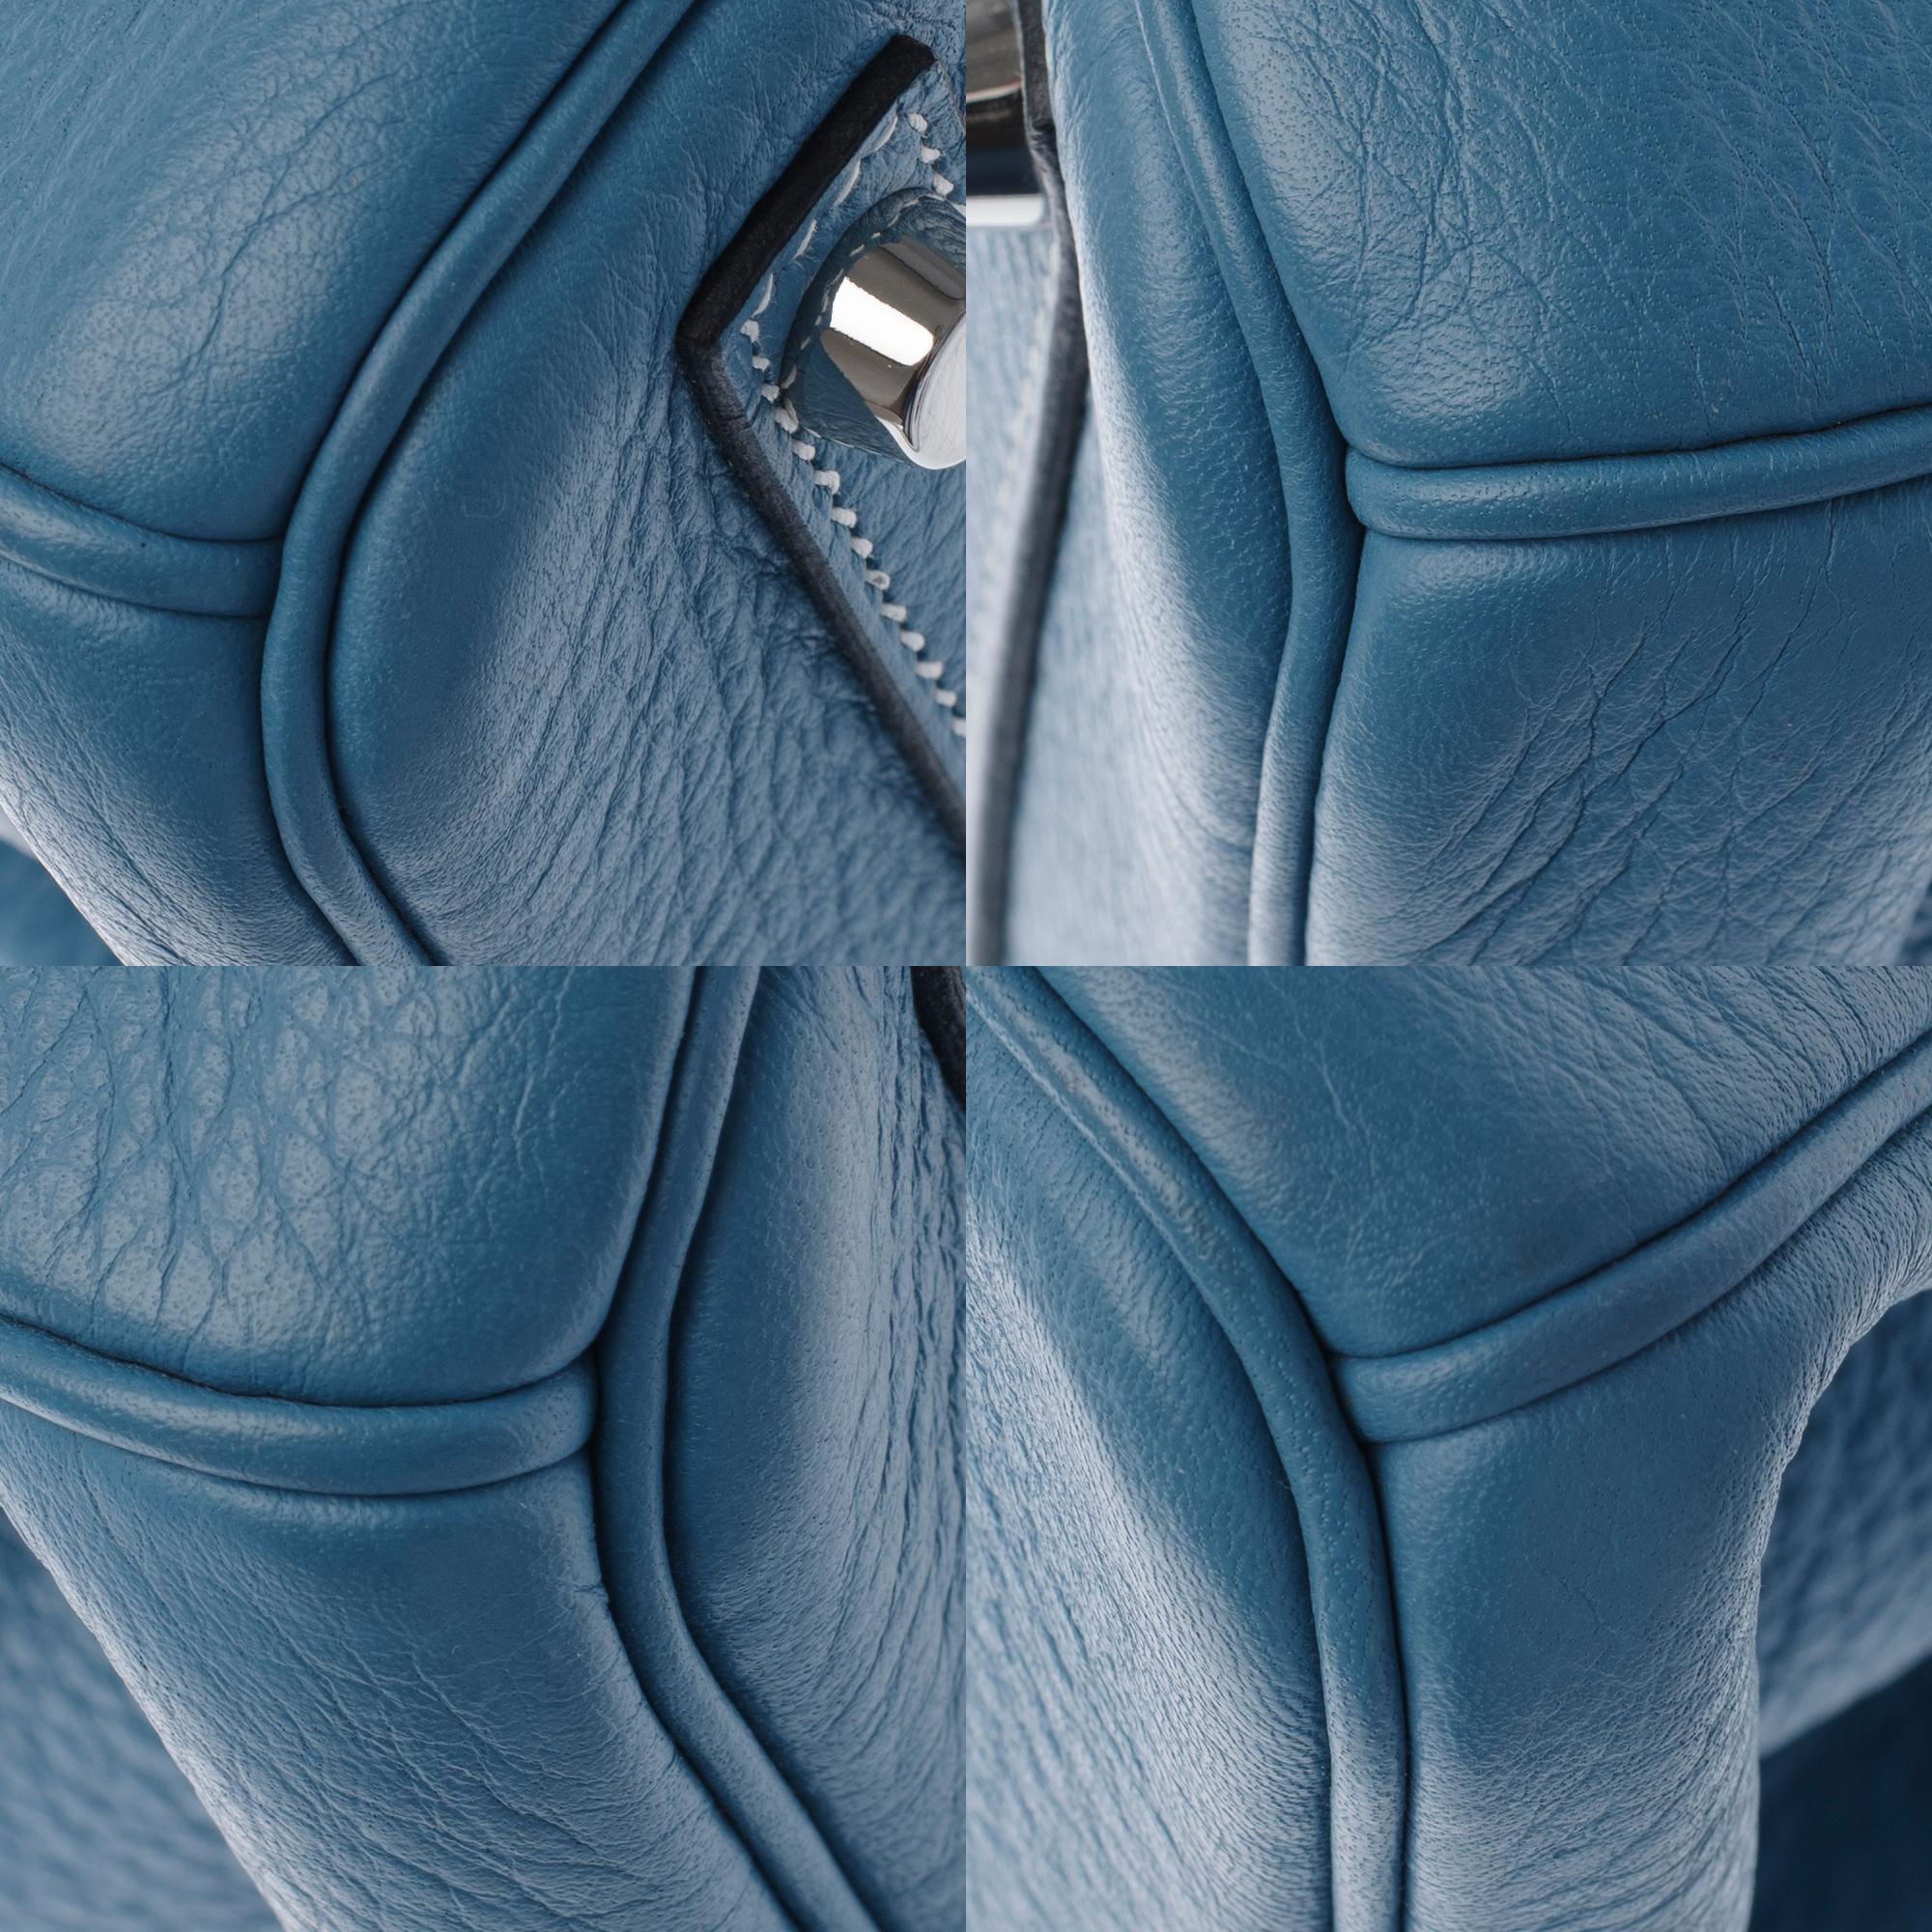 Hermès Birkin 30 handbag in Togo blue jean leather, PHW 6